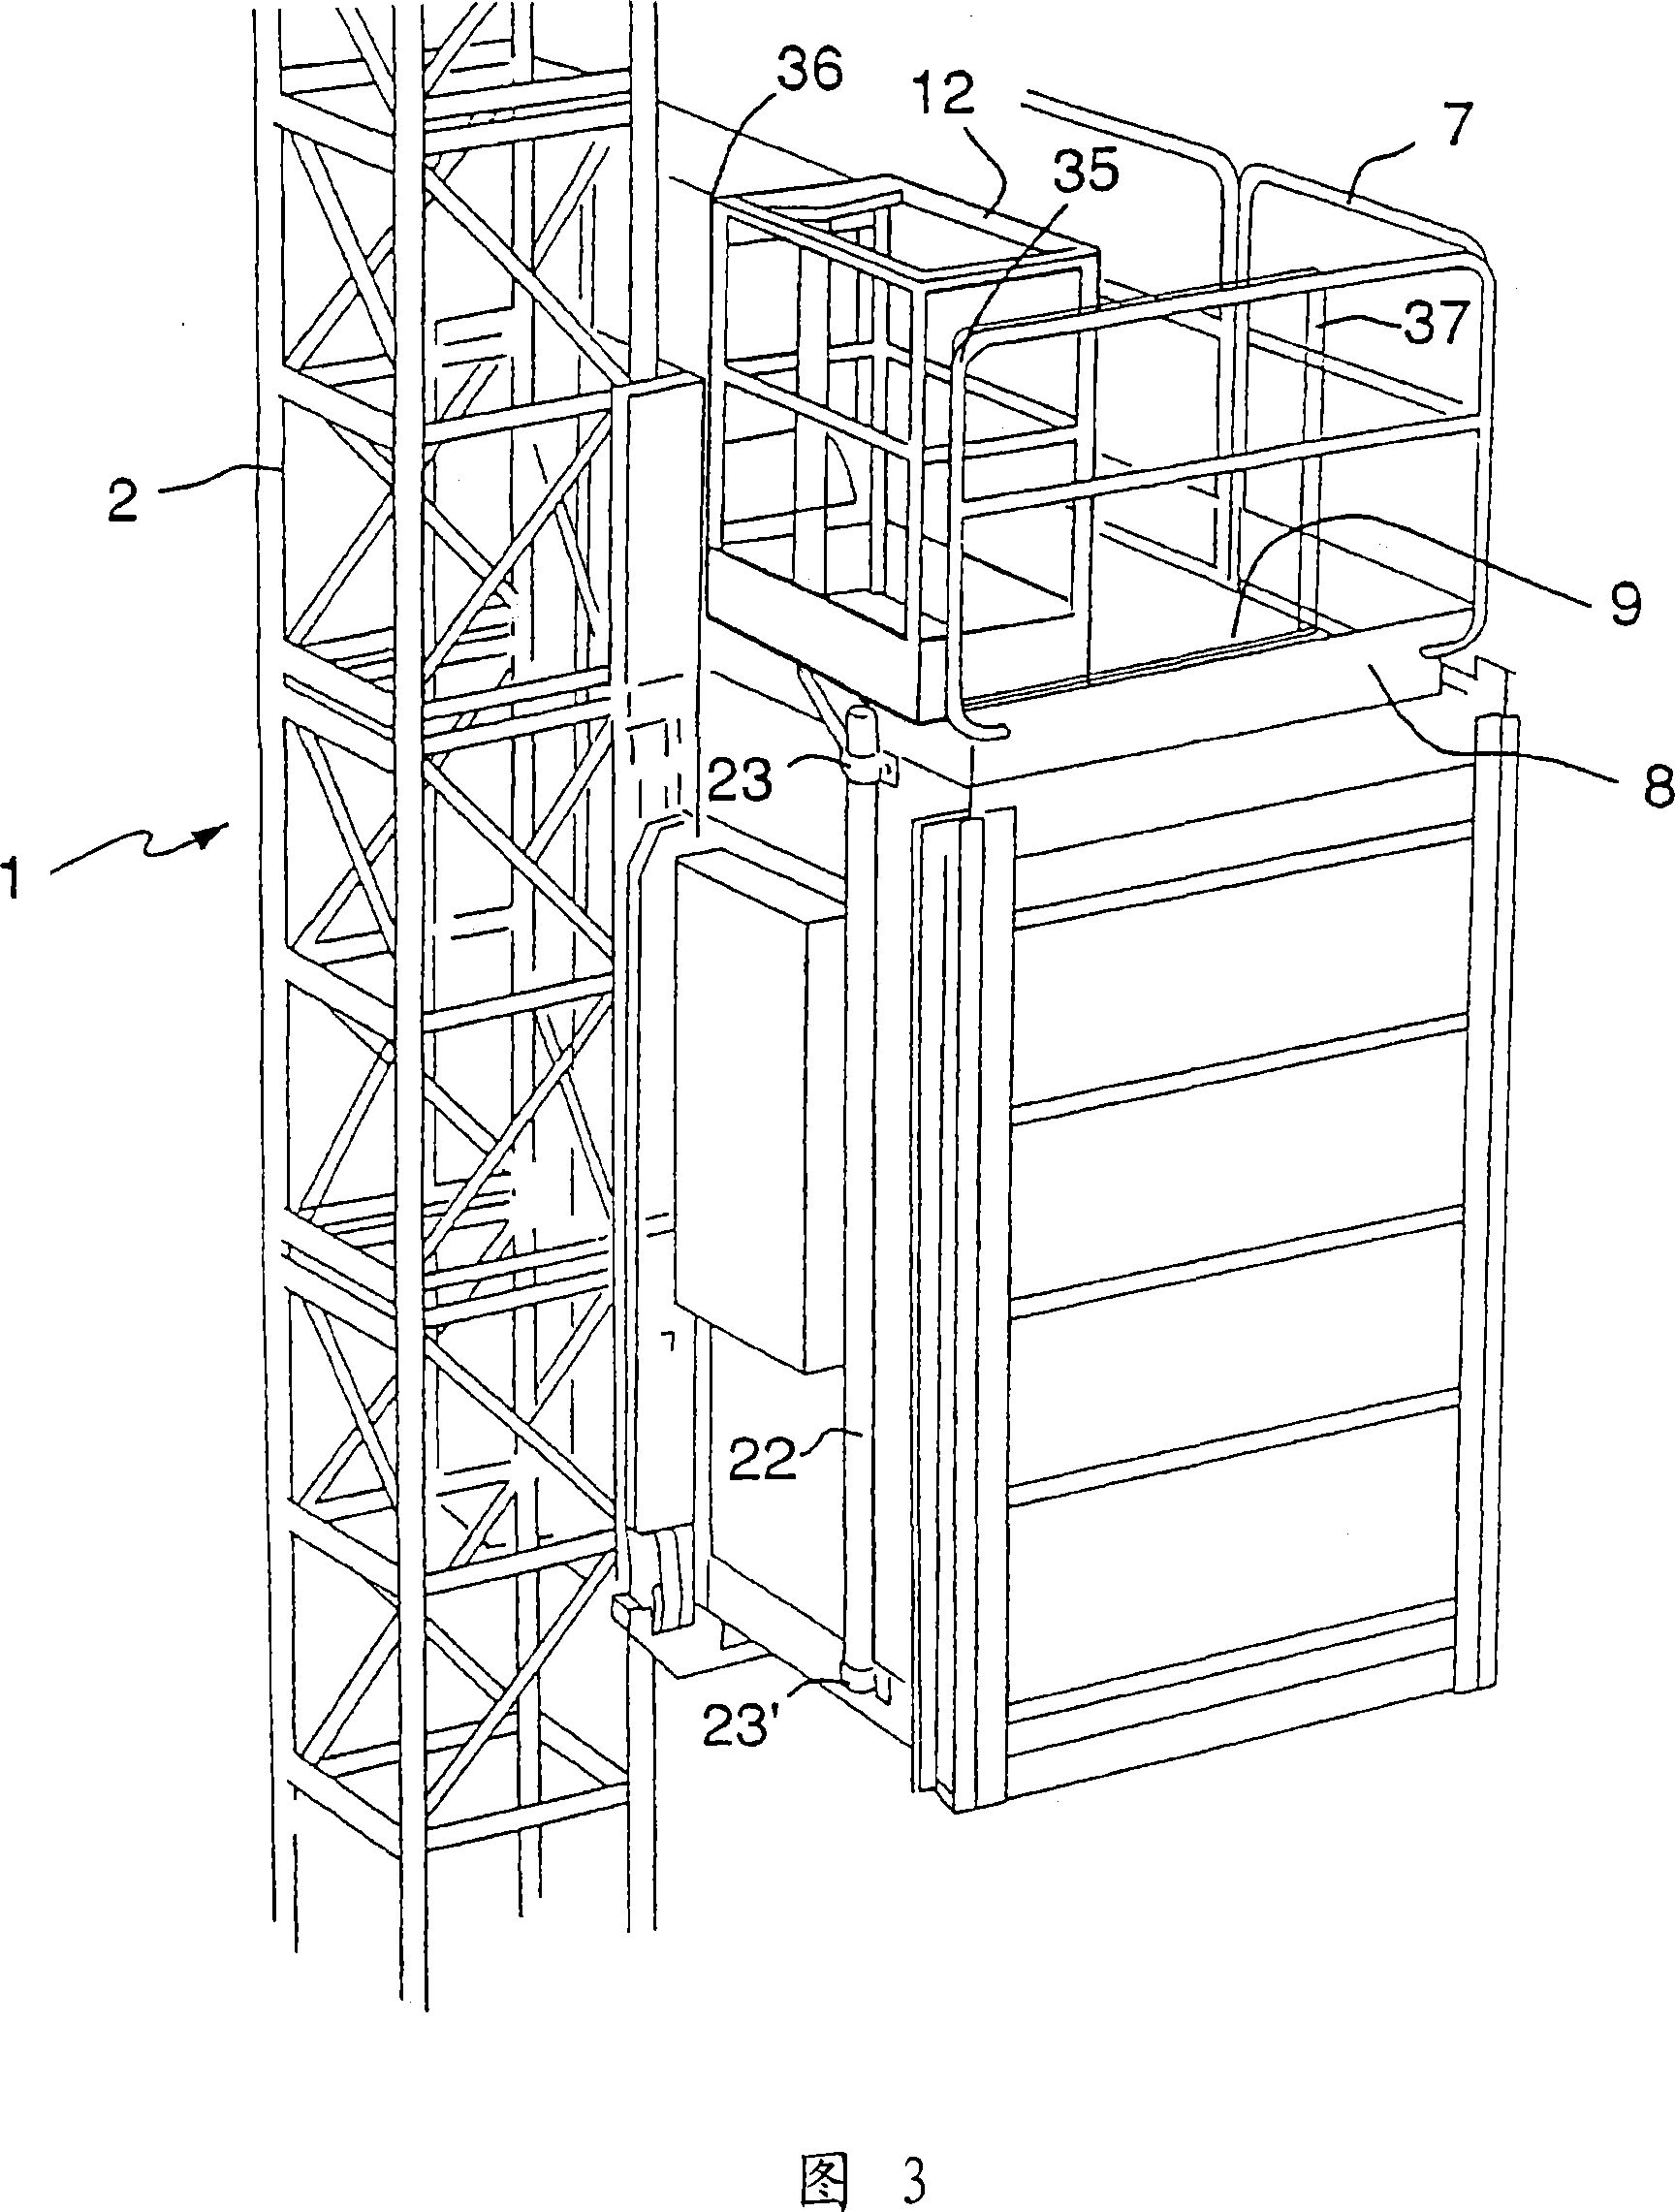 Elevator system